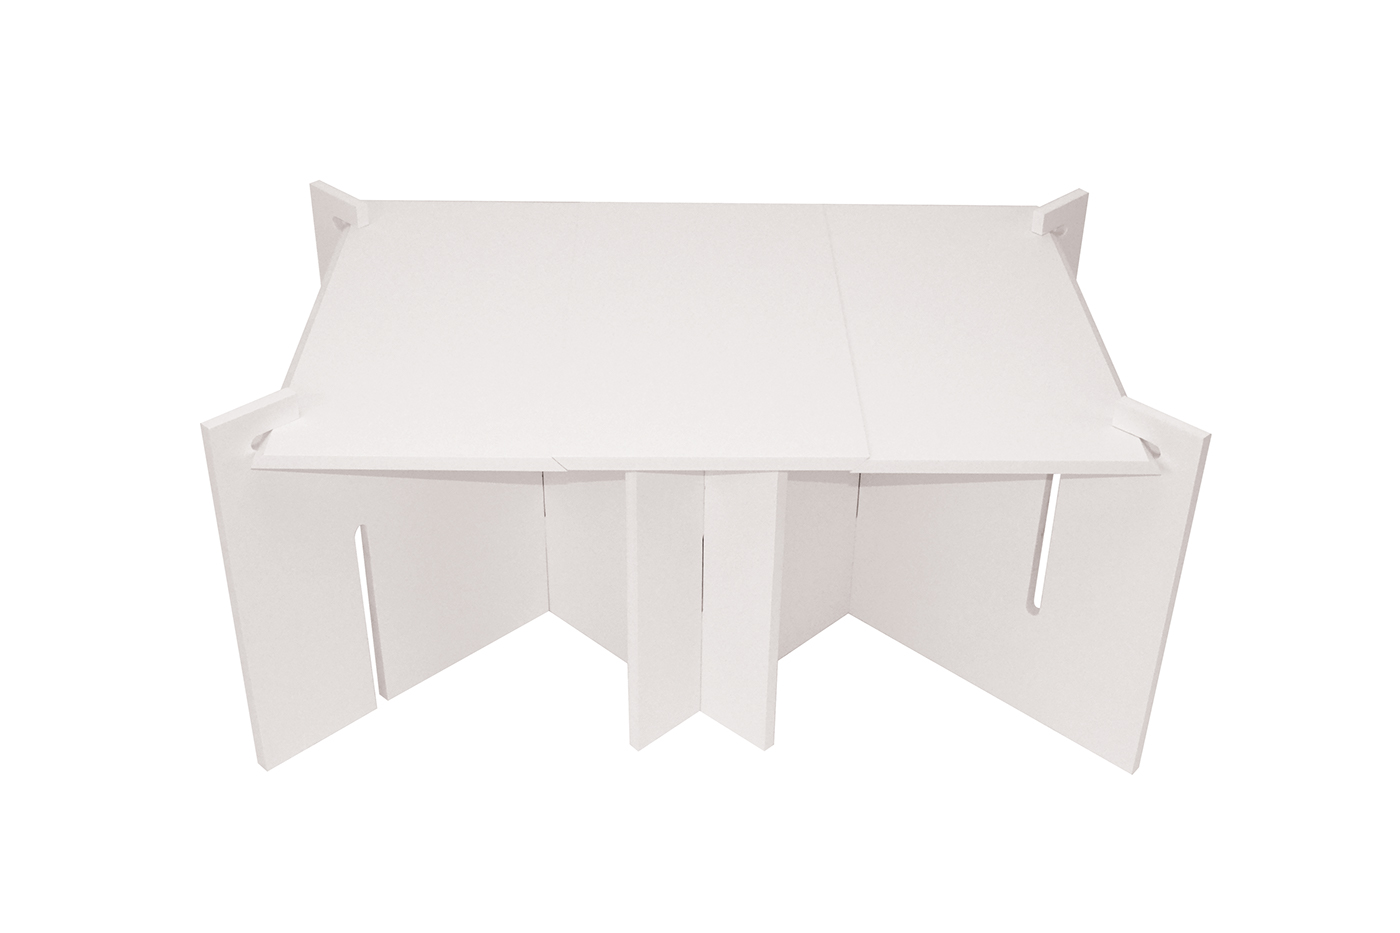 interlocking Adaptable furniture table shelves design modular